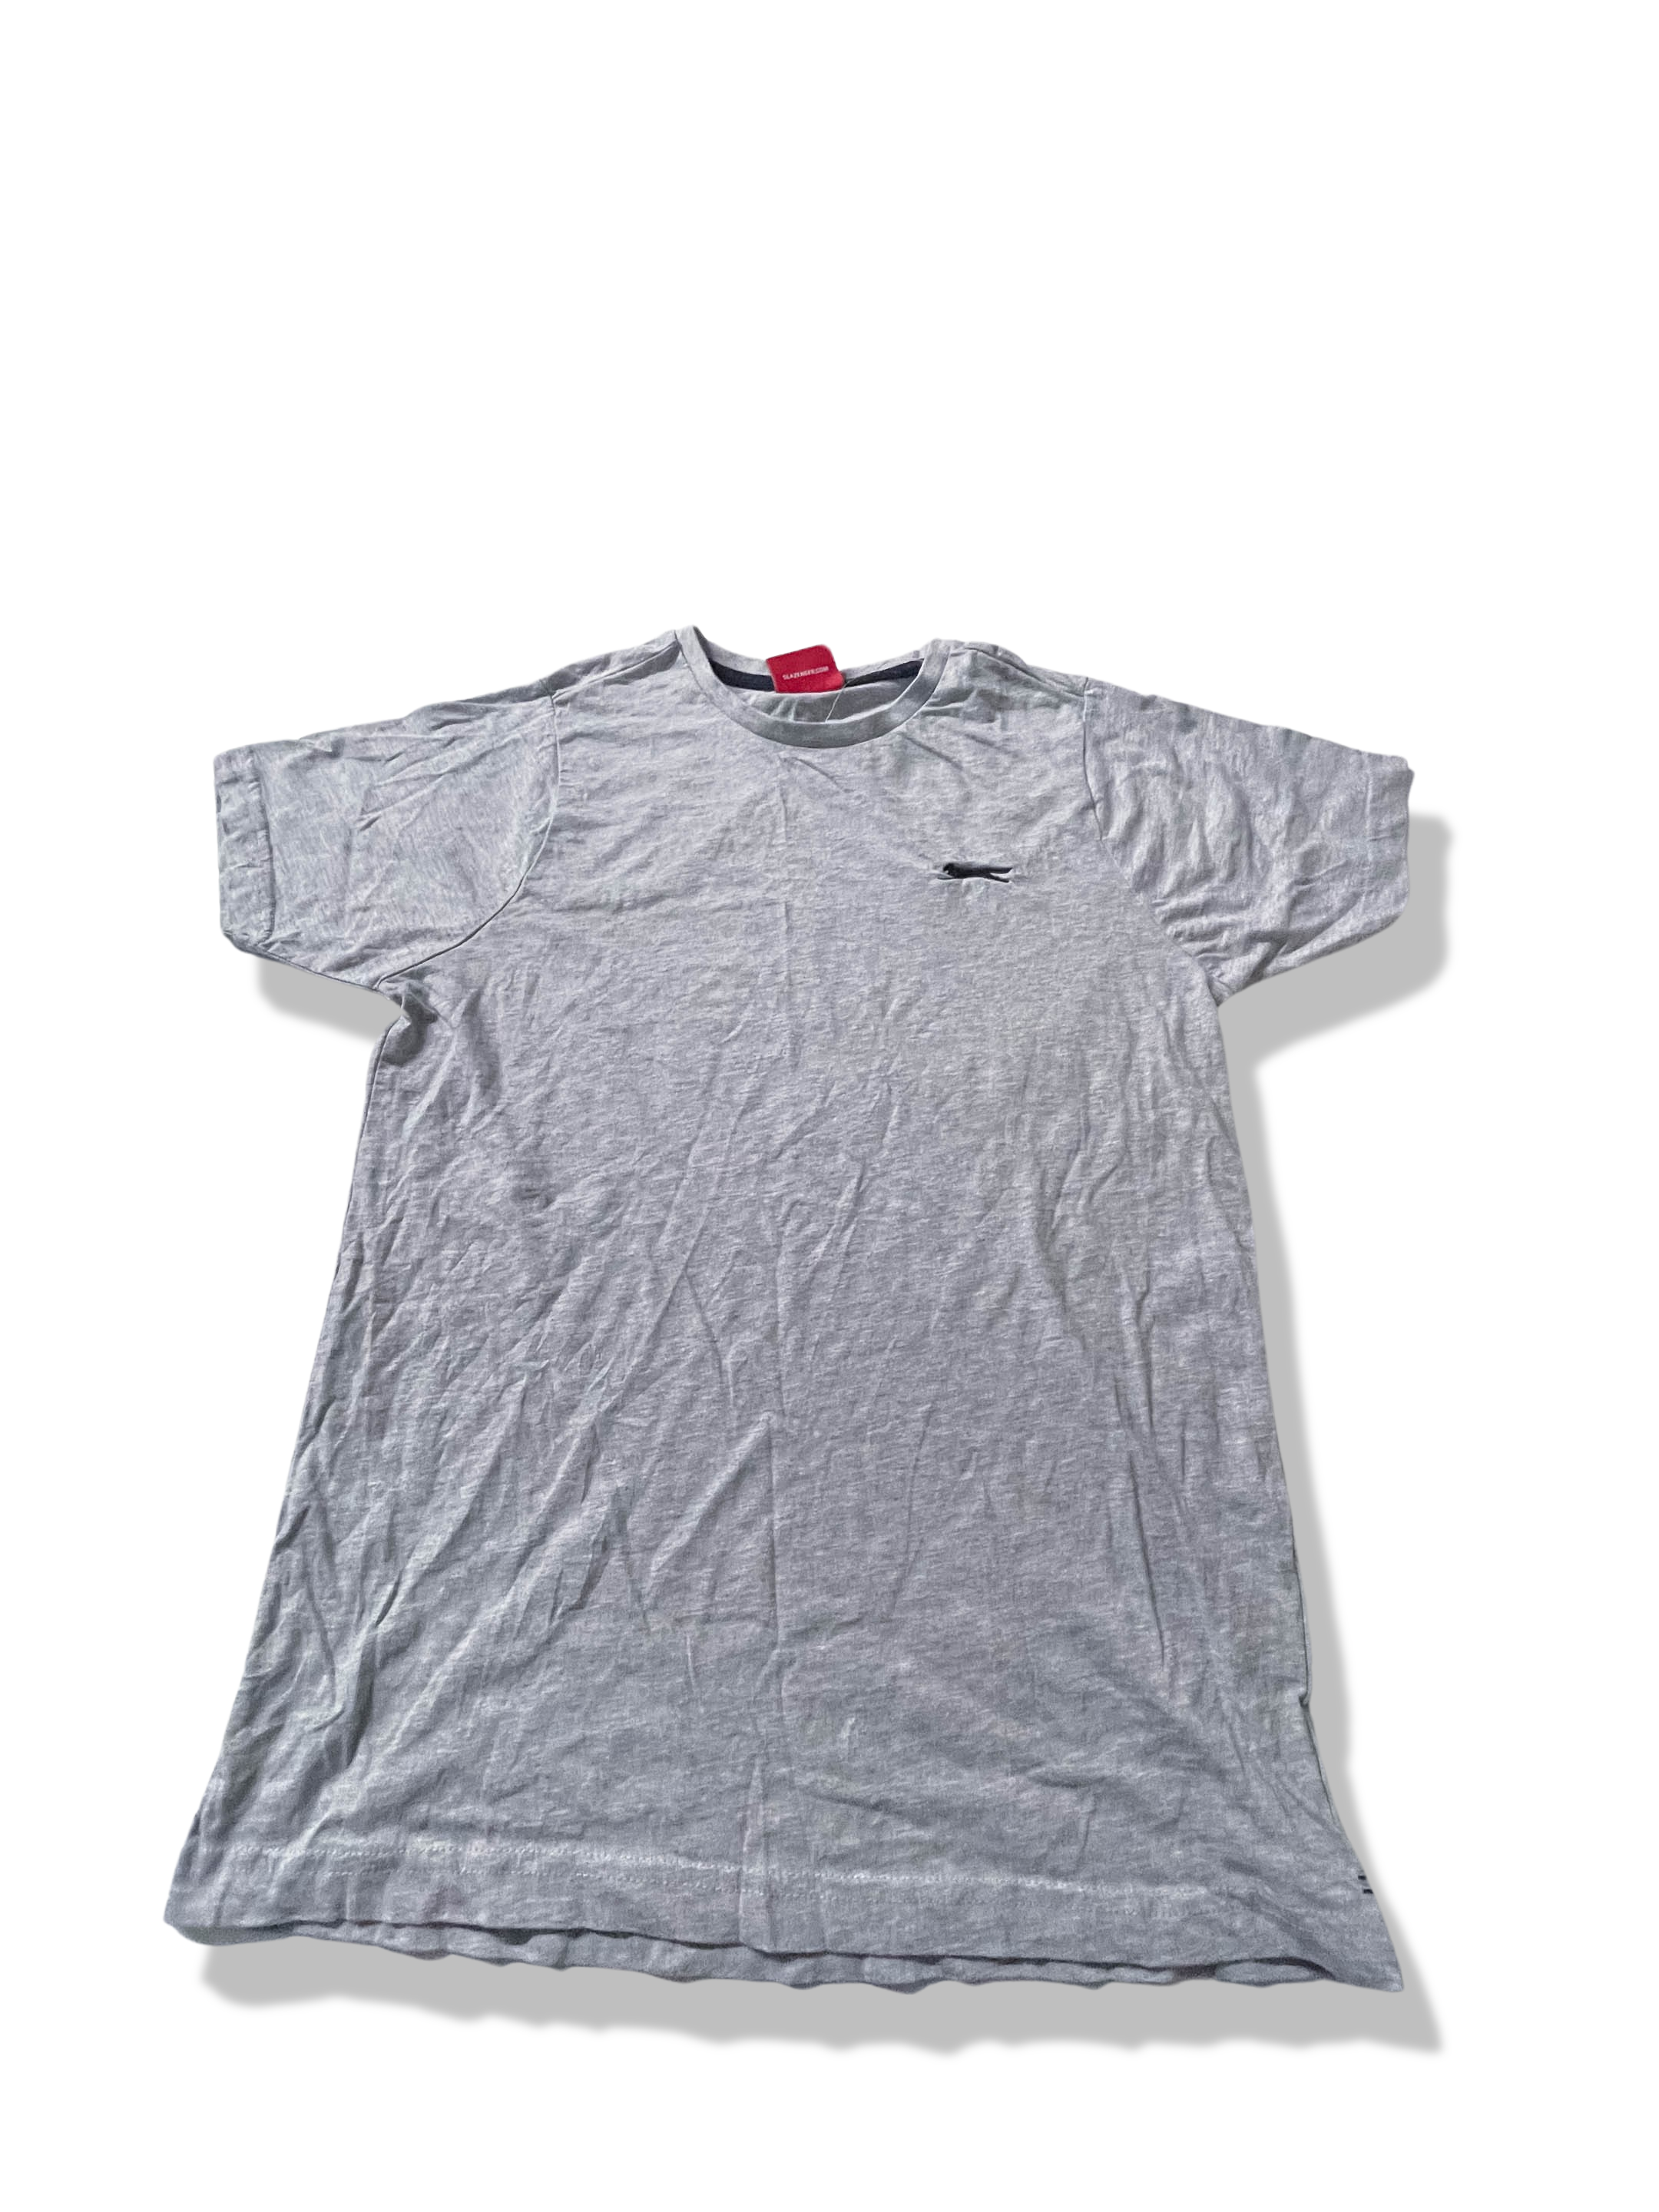 Vintage mens plain grey slazenger tshirt size XS